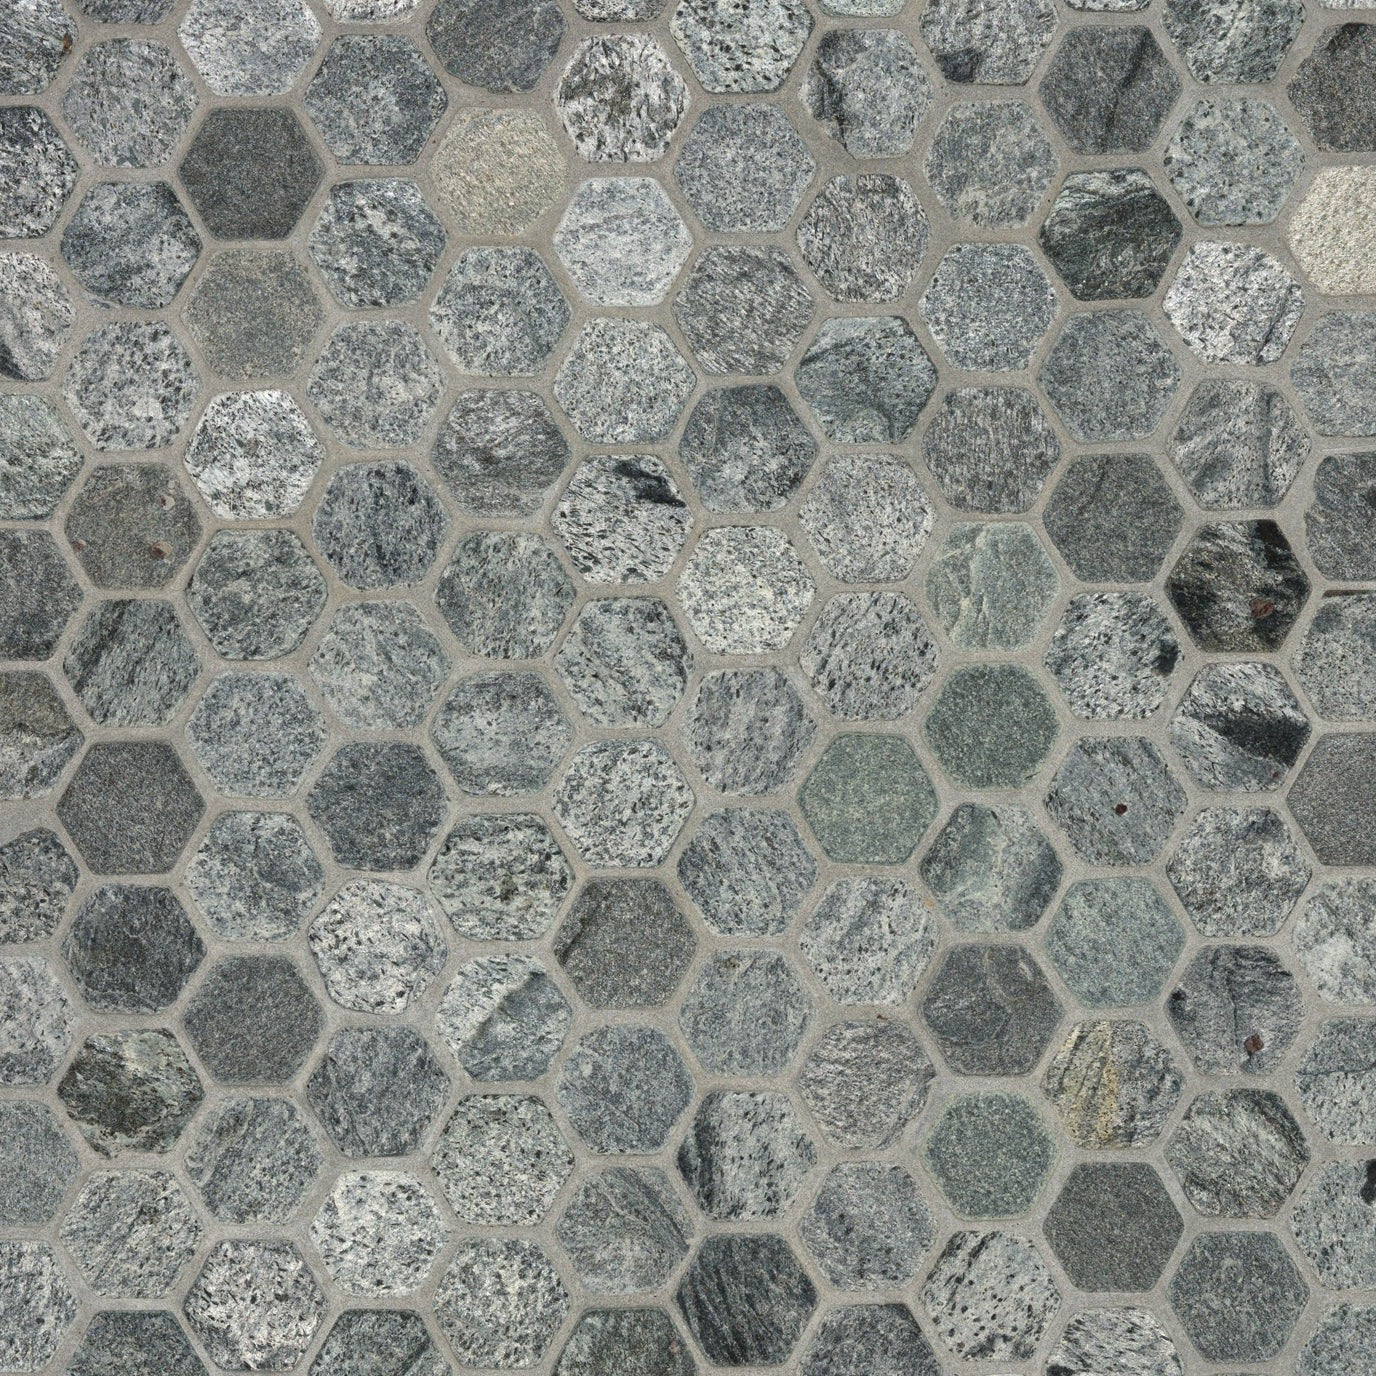 Quartzite-Mosaic-SILVER Quartzite Mosaic Hexagon 2"- Stone Supplier - Rocks in Stock